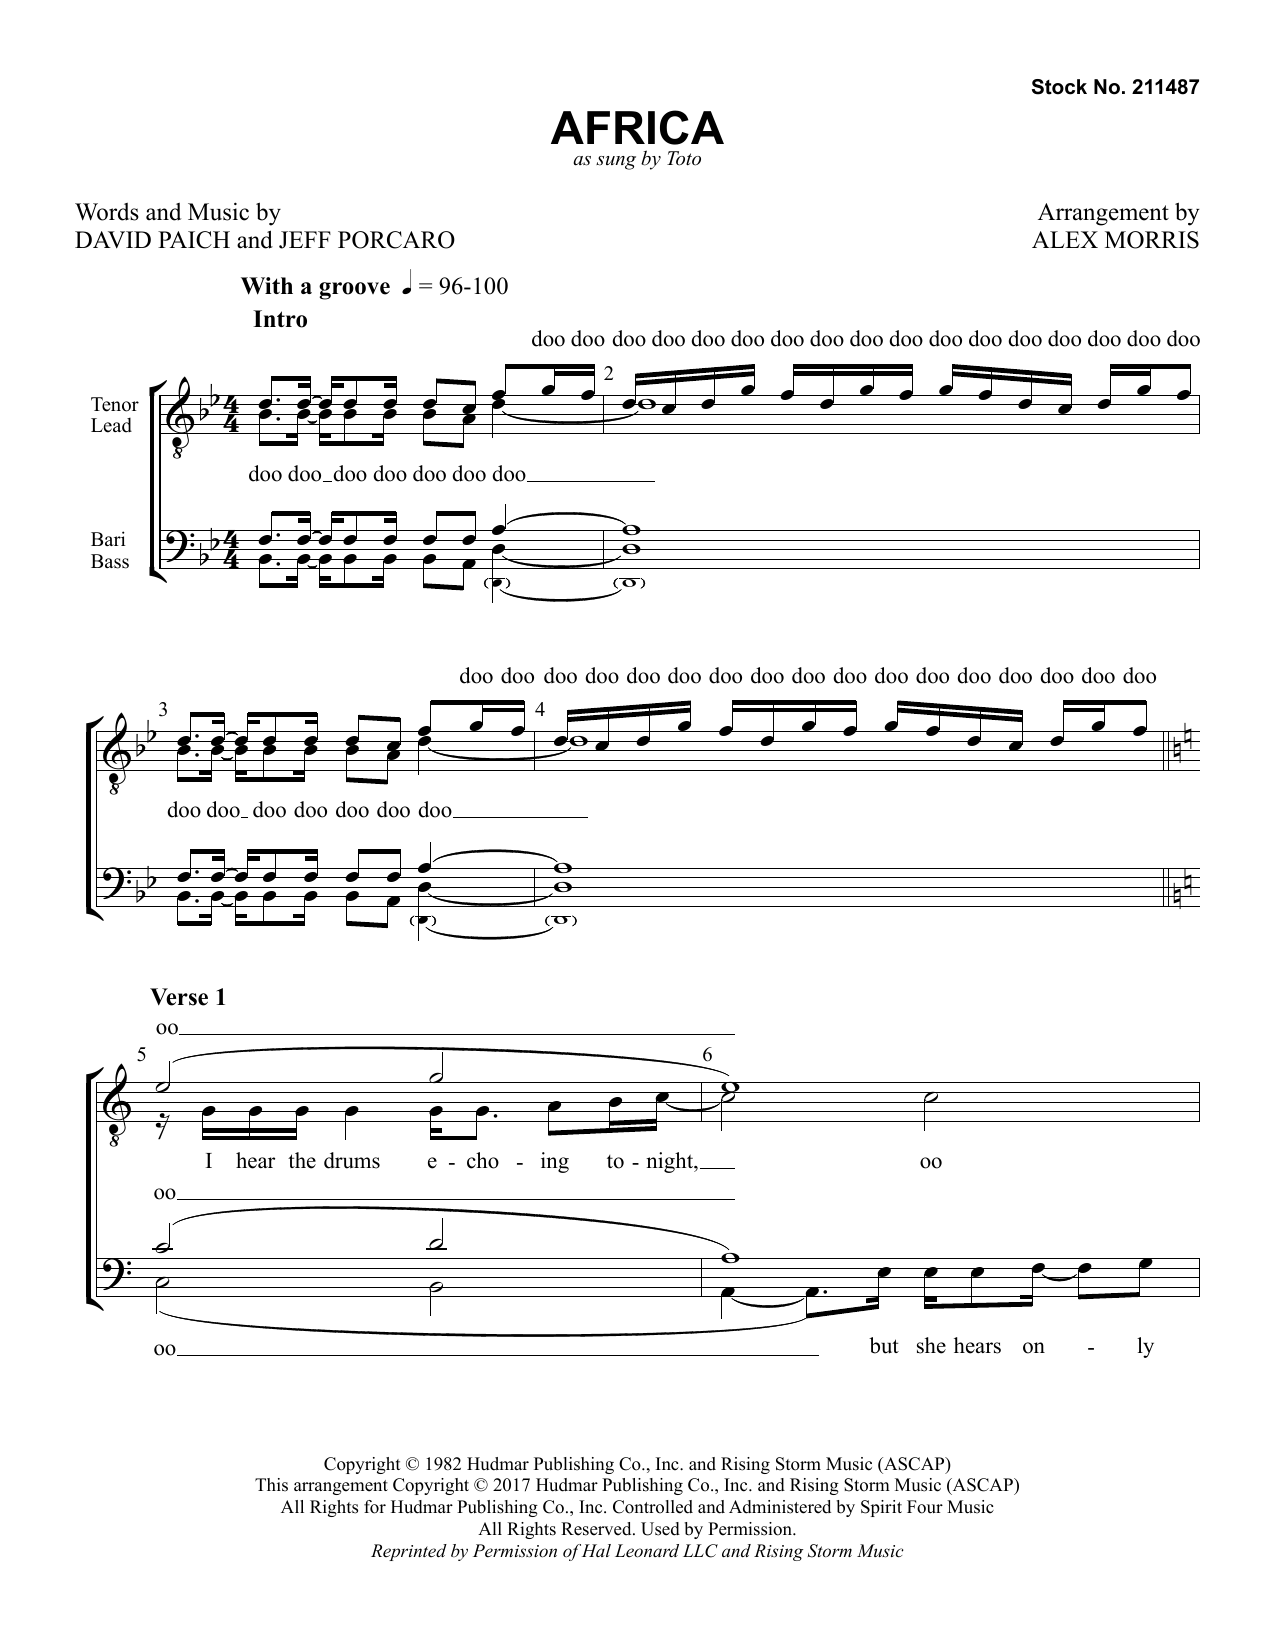 Toto Africa (arr. Alex Morris) Sheet Music Notes & Chords for TTBB Choir - Download or Print PDF